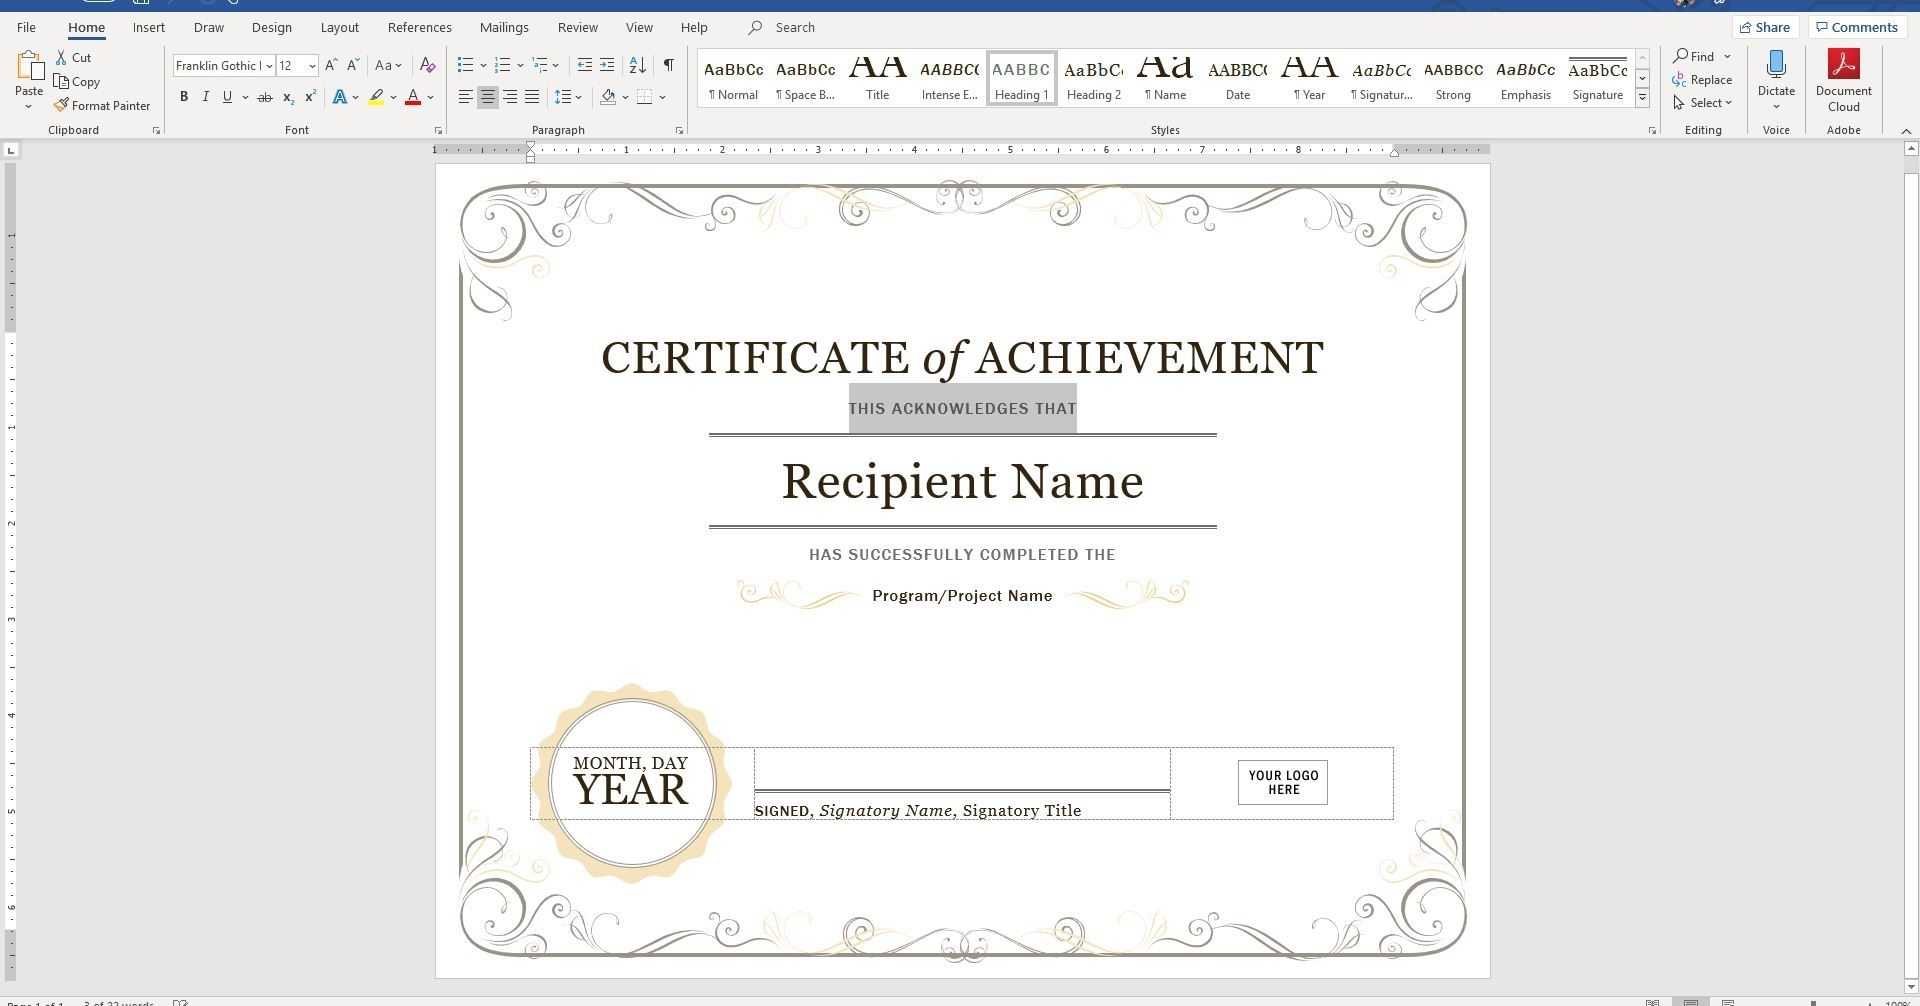 Certificate Template In Word | Safebest.xyz Pertaining To Free Certificate Templates For Word 2007